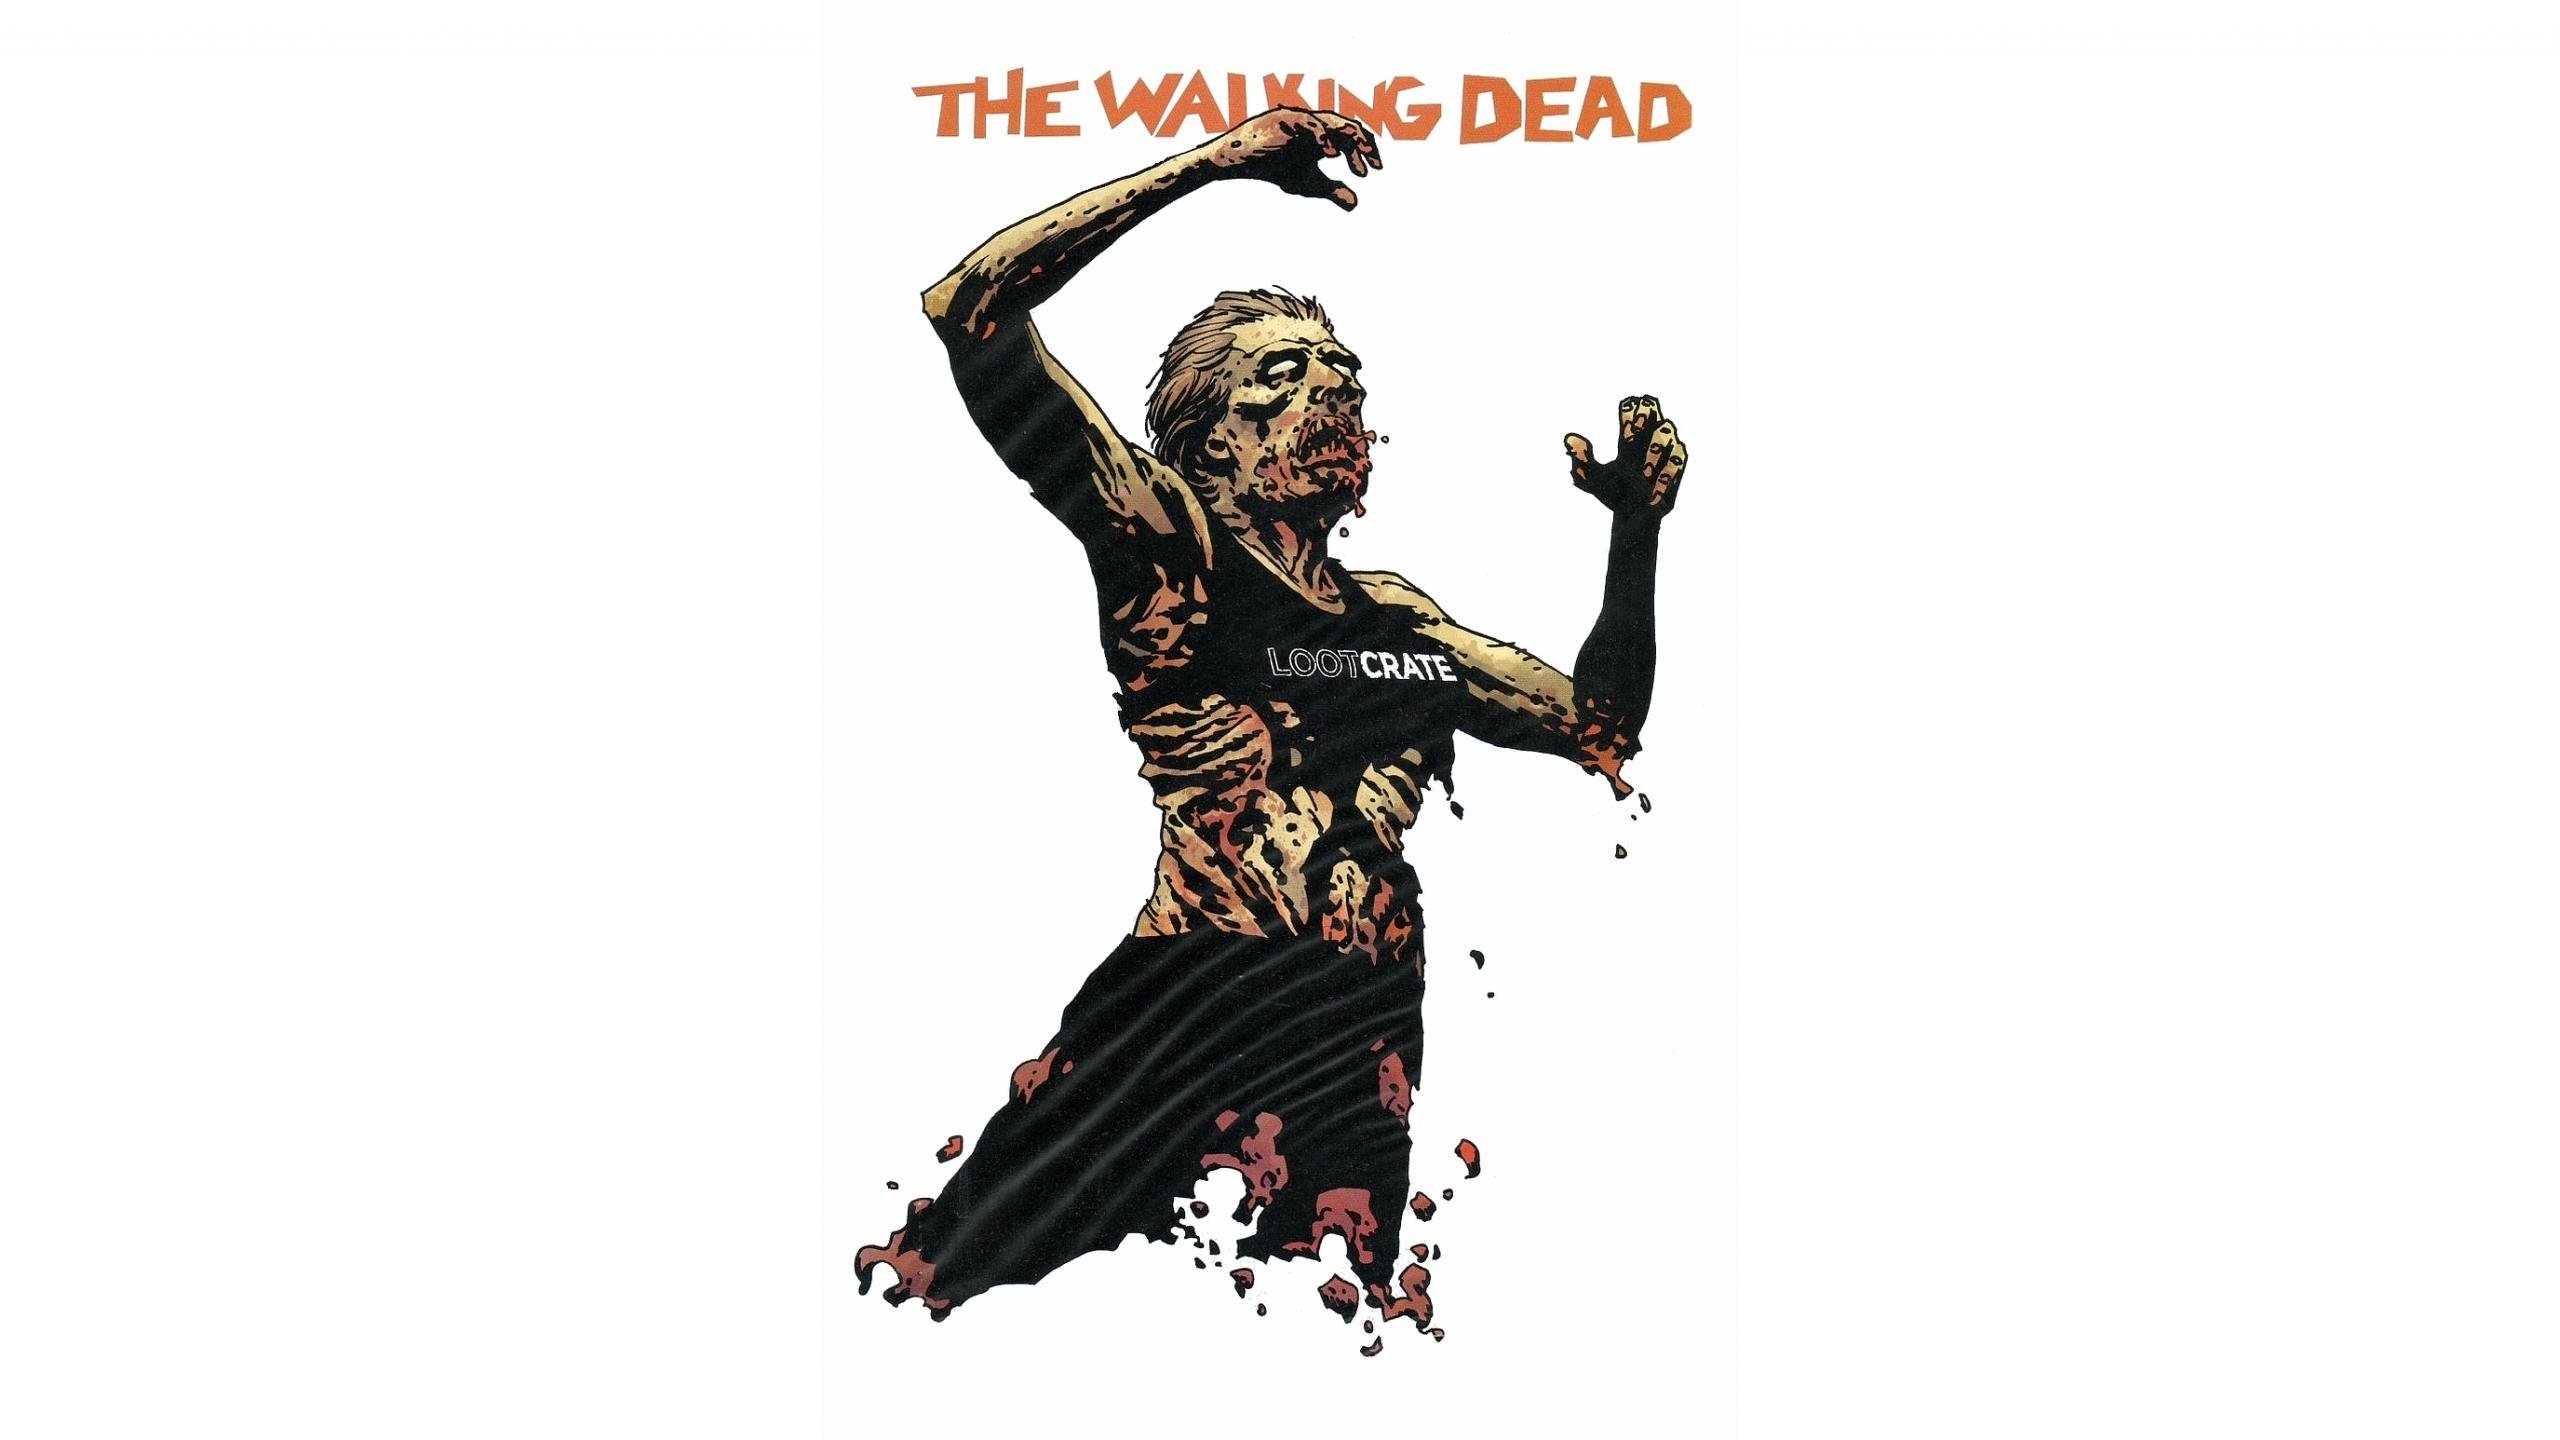 Best Walking Dead Comics wallpaper ID:84332 for High Resolution hd 2560x1440 computer